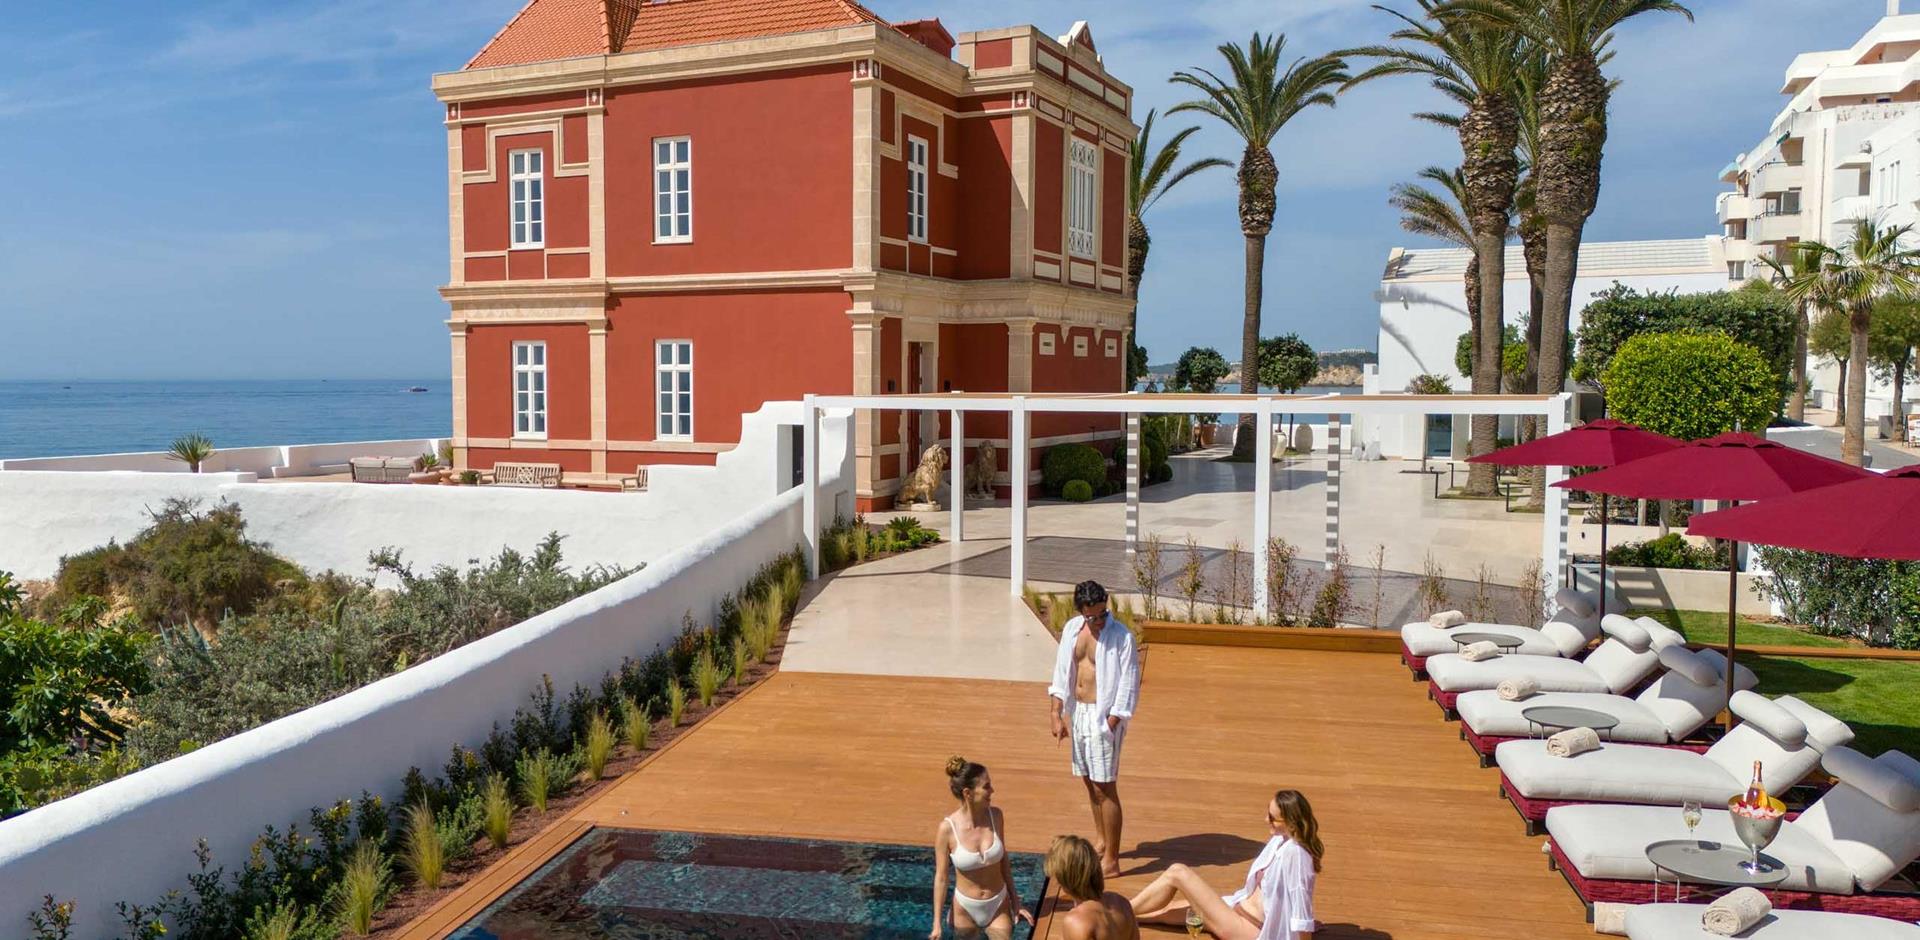 Pool, Casa Rosada Beach Castel, Algarve